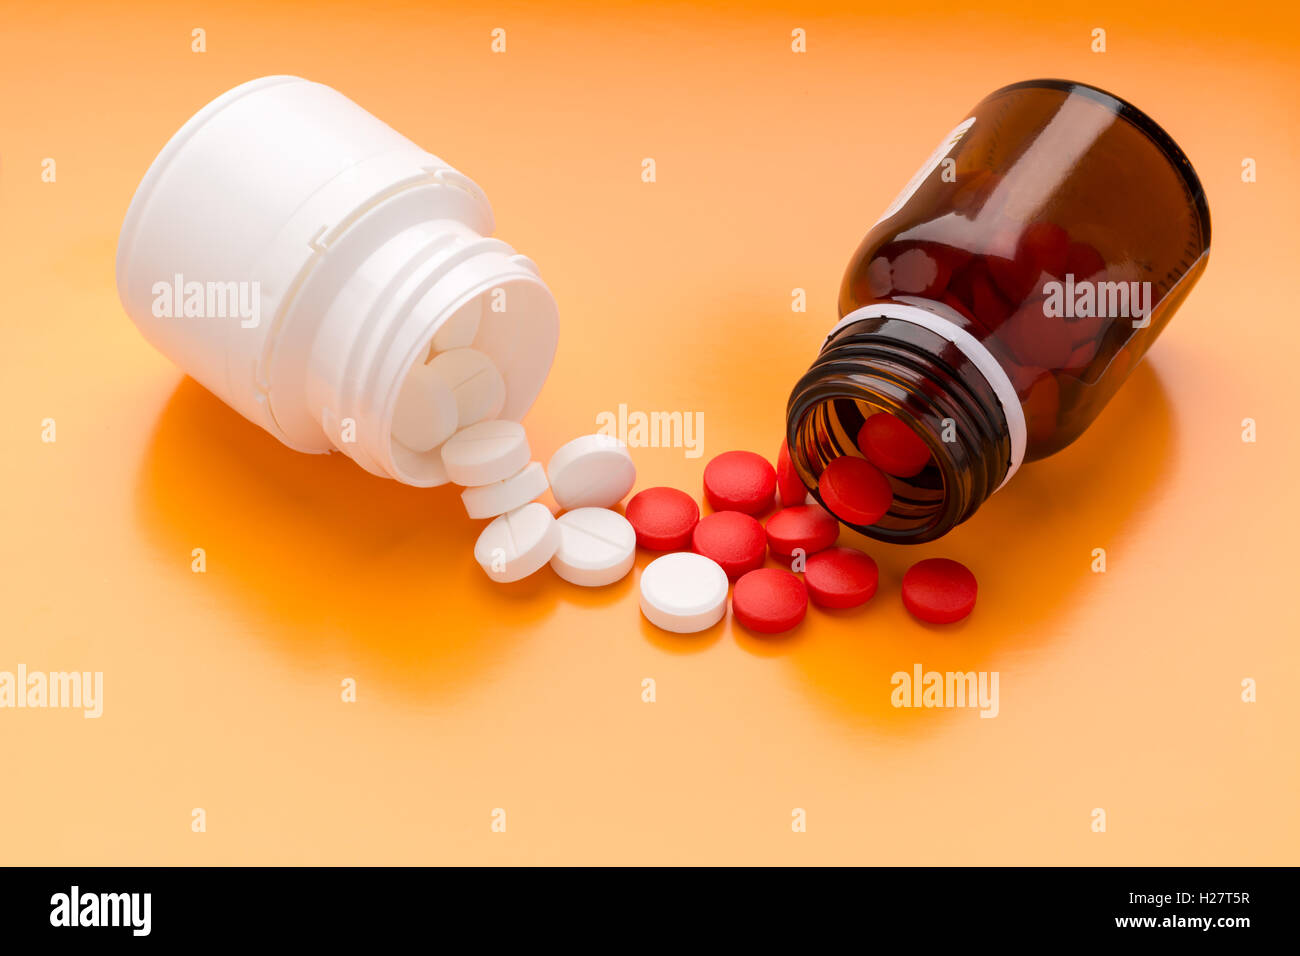 Round white pills and plastic pill bottle Stock Photo